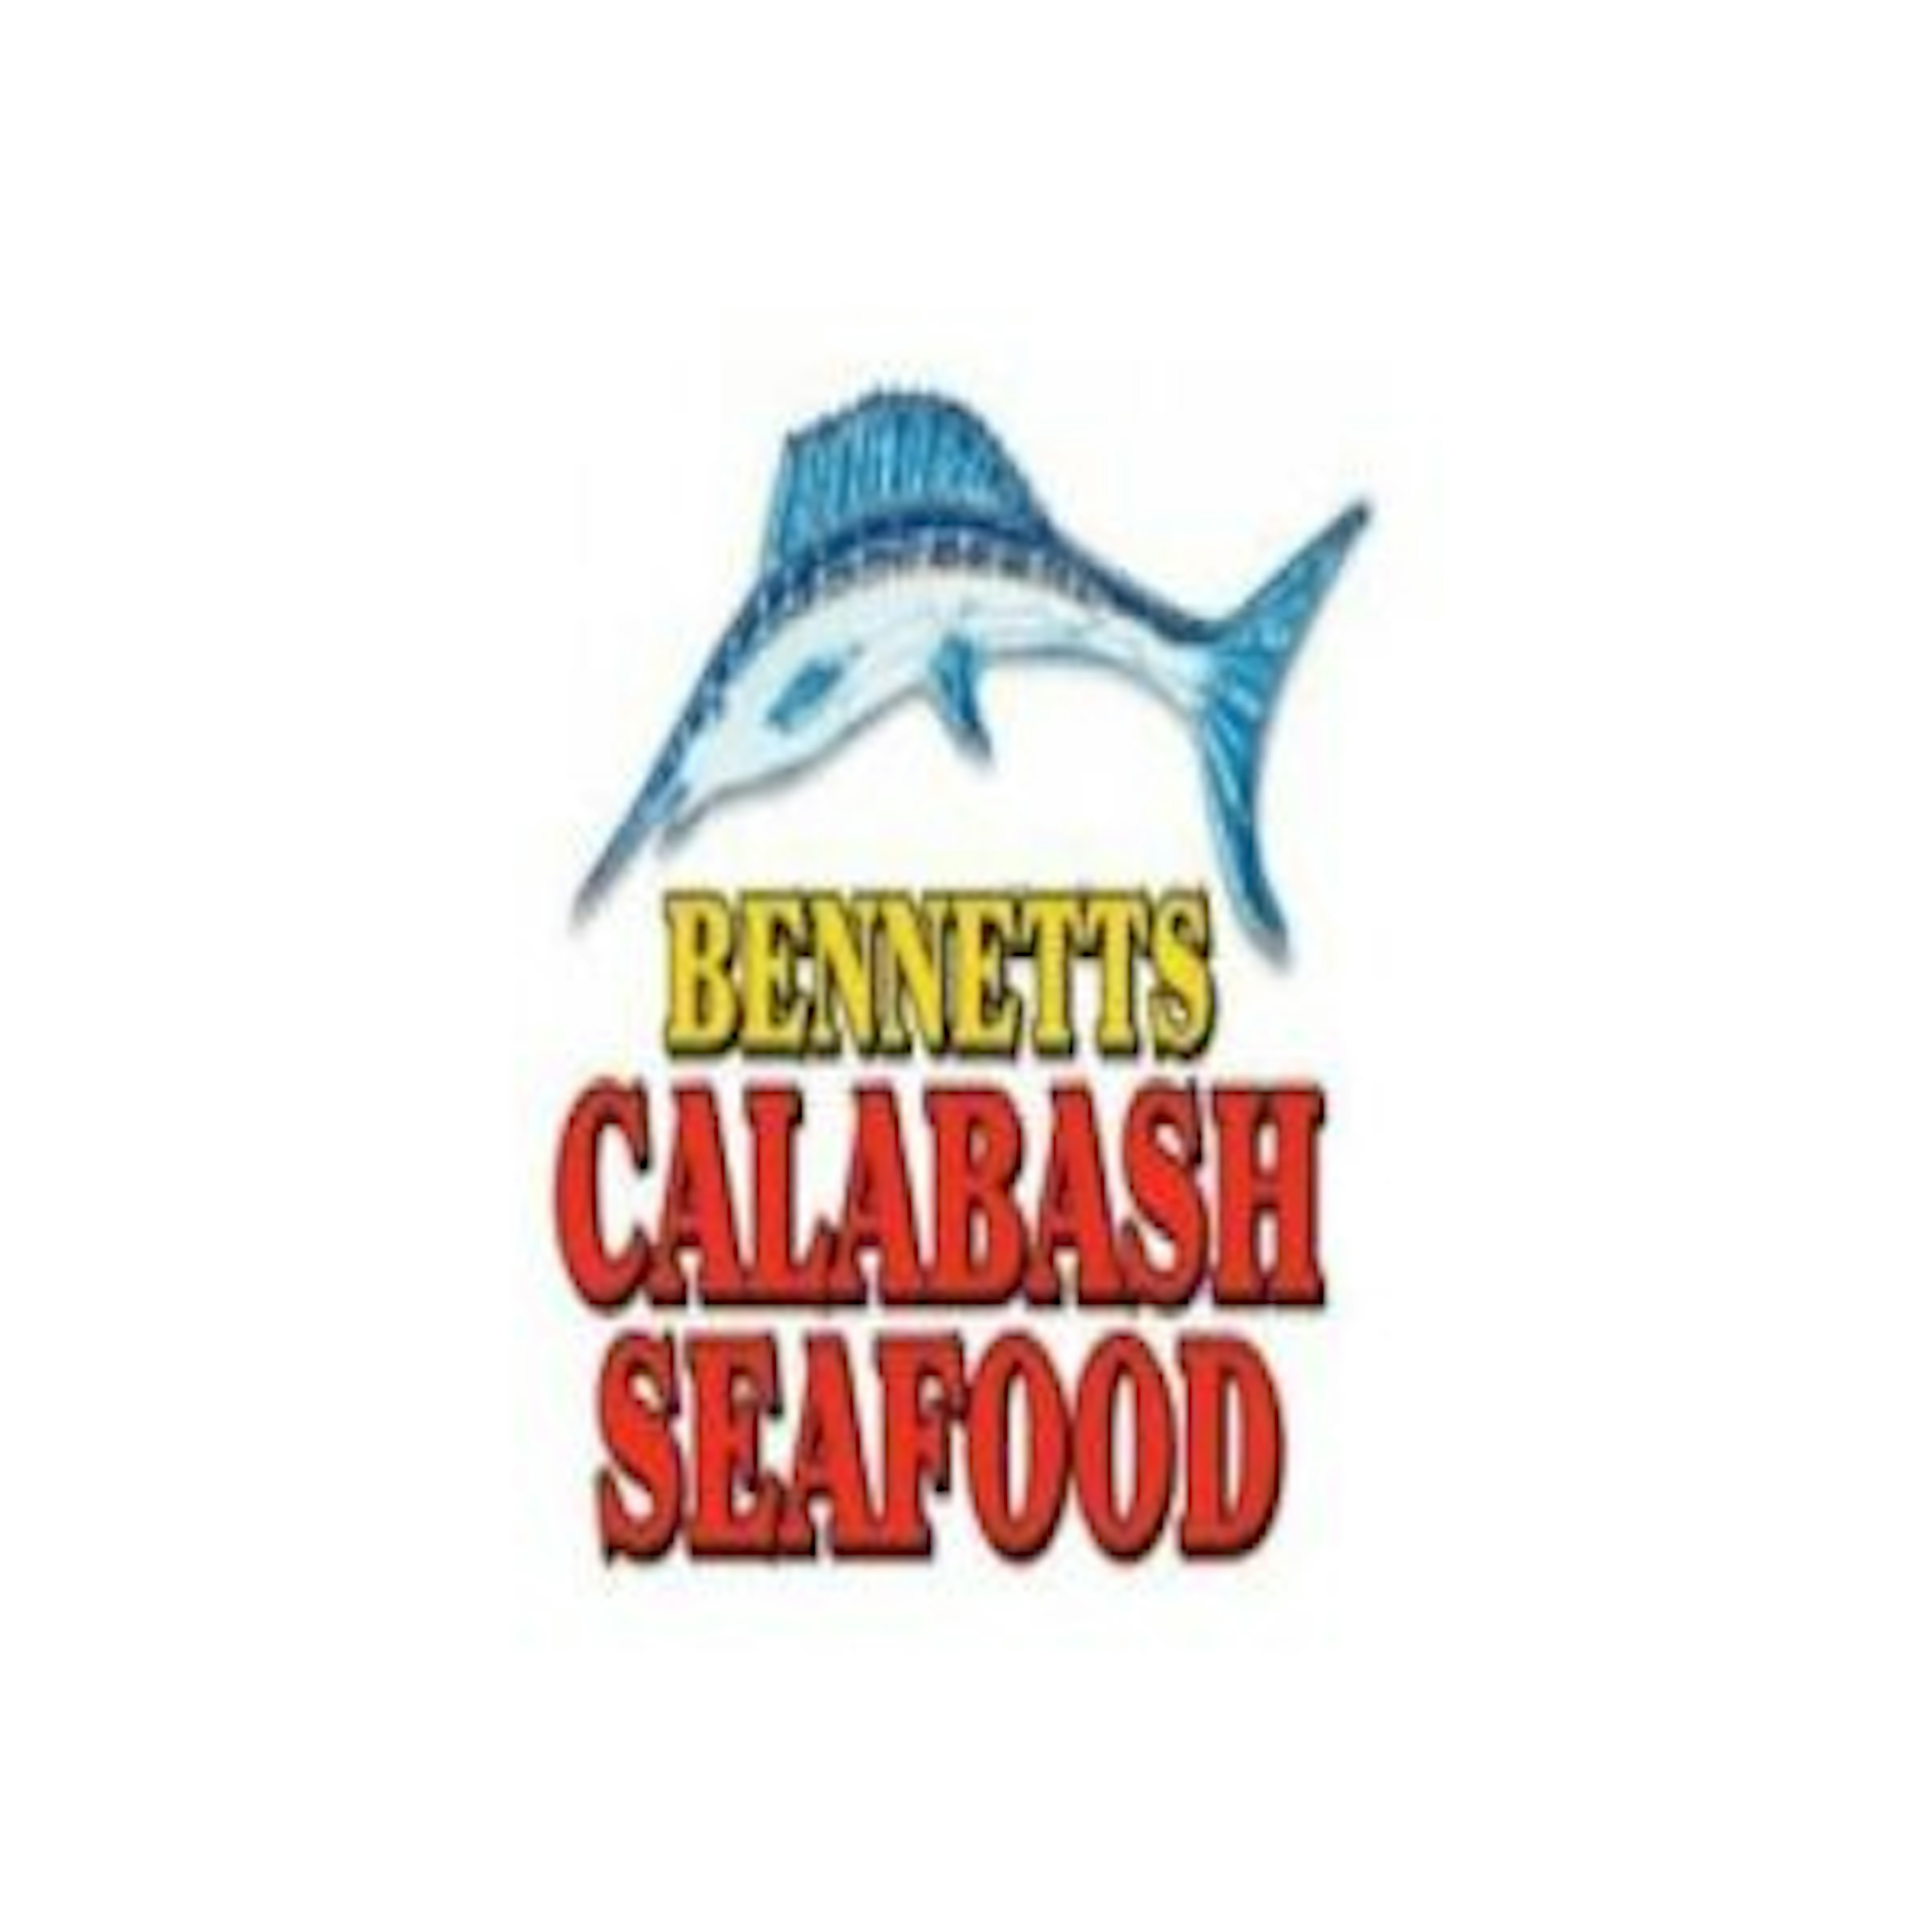 Bennett’s Calabash Seafood